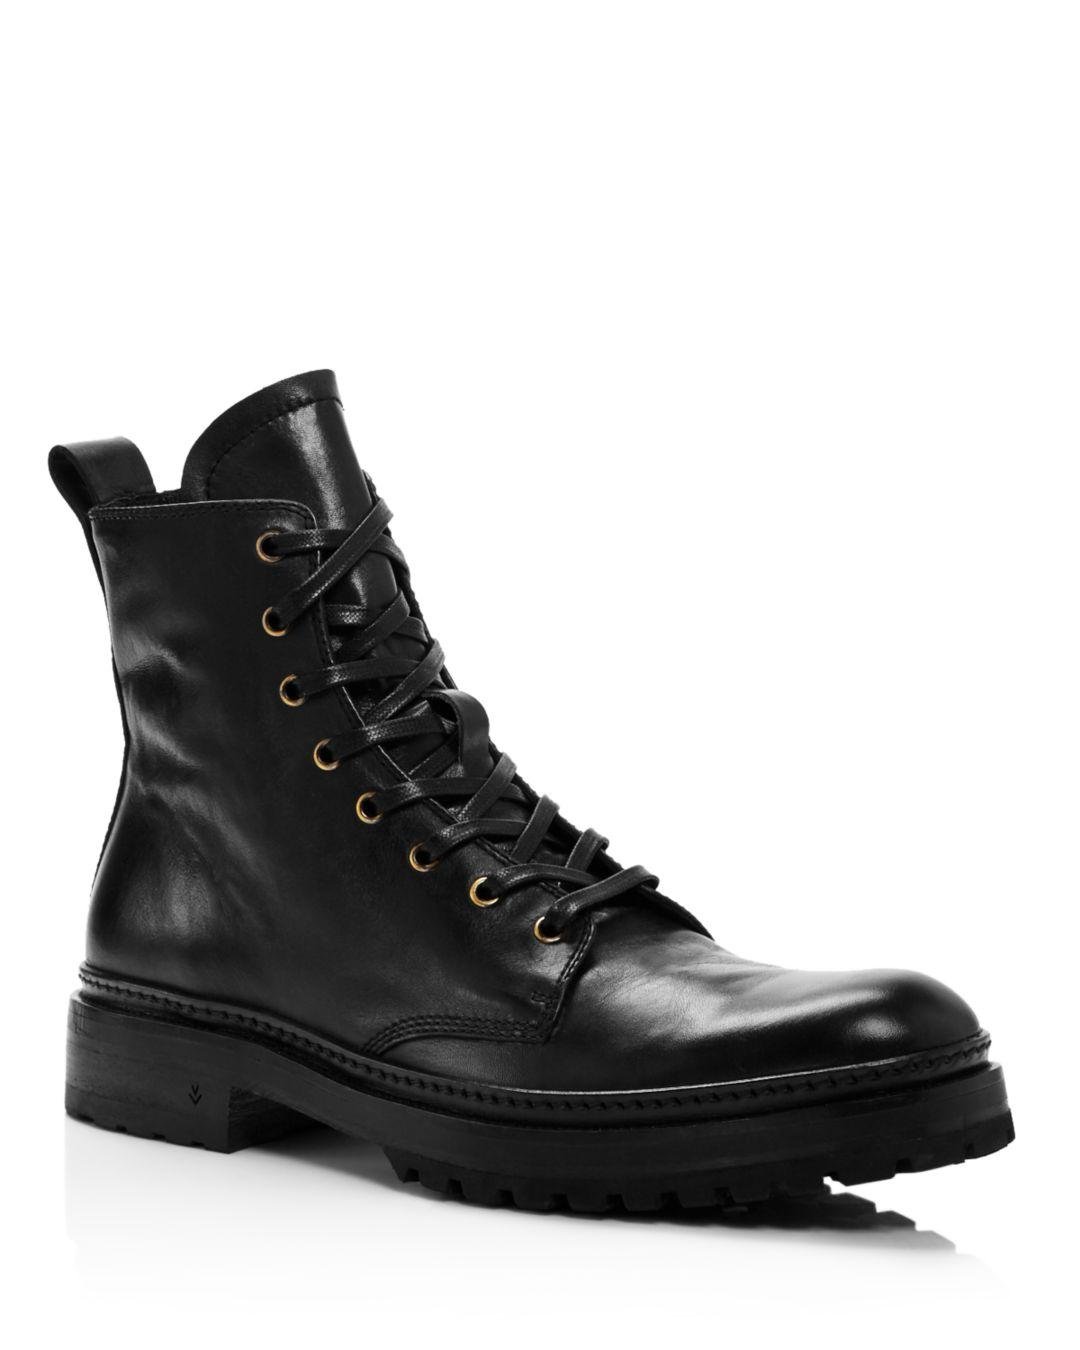 John Varvatos Men's Leather Combat Boots in Black for Men - Lyst